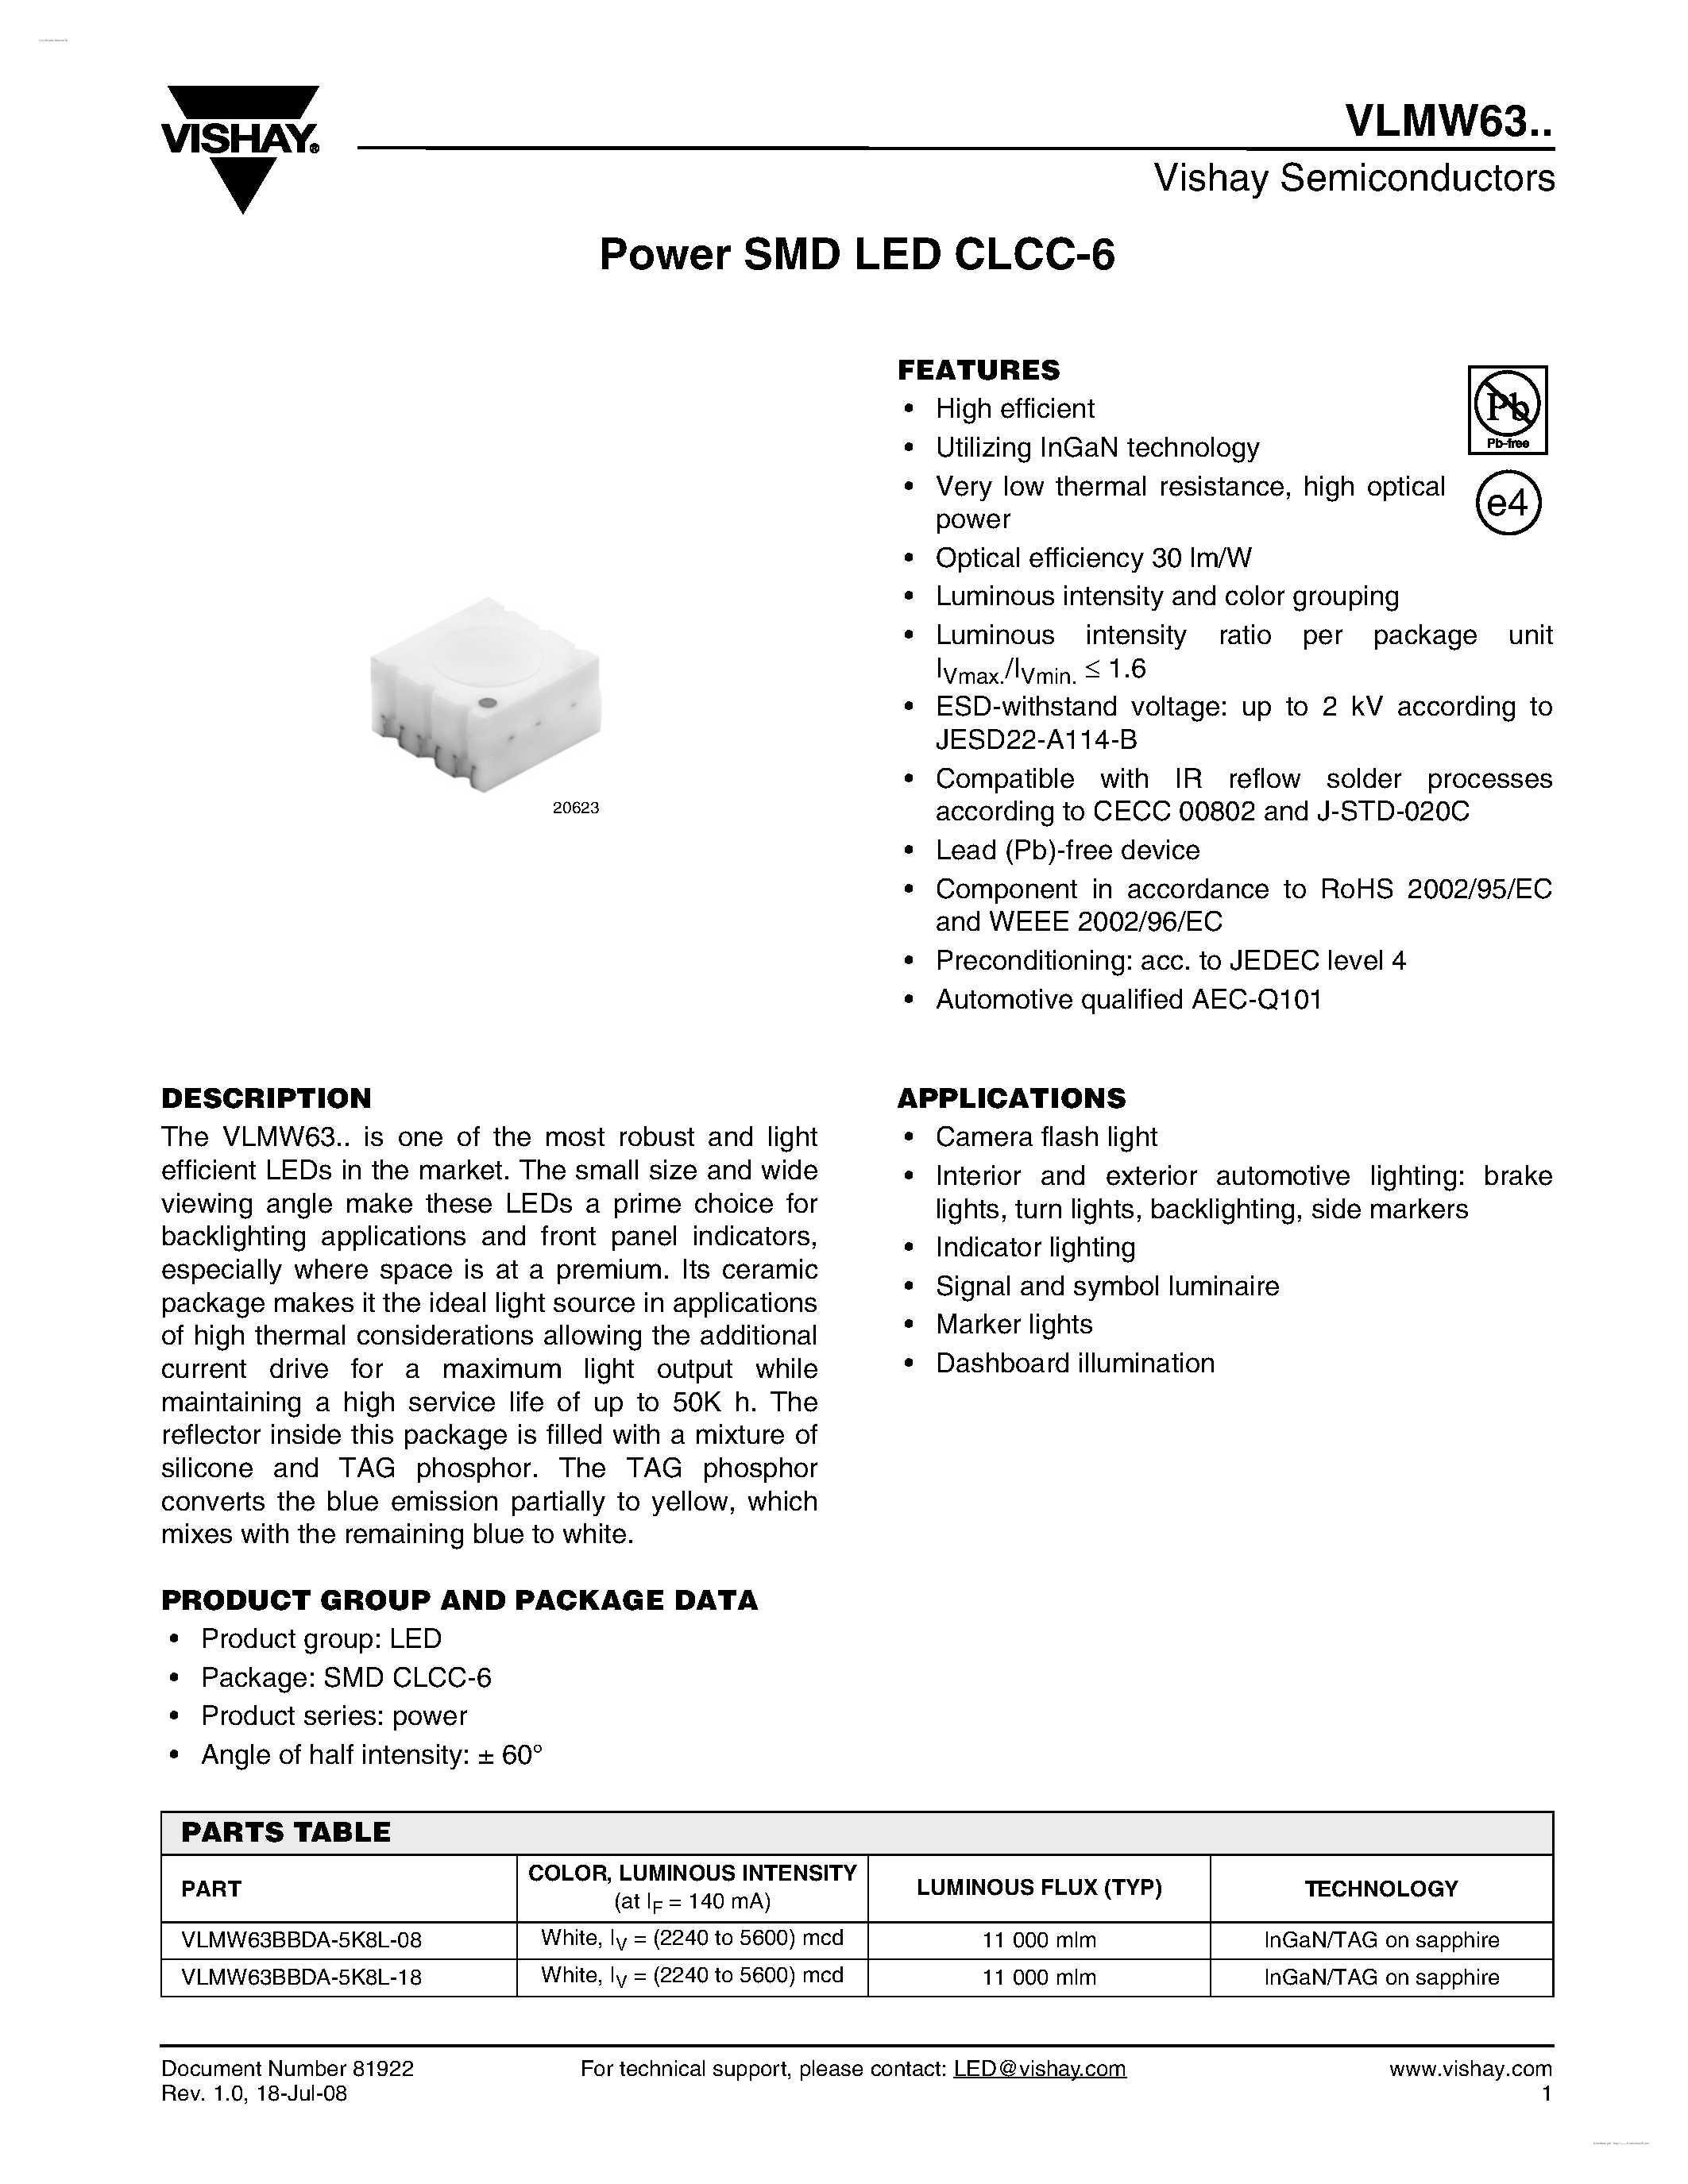 Даташит VLMW63 - Power SMD LED CLCC-6 страница 1